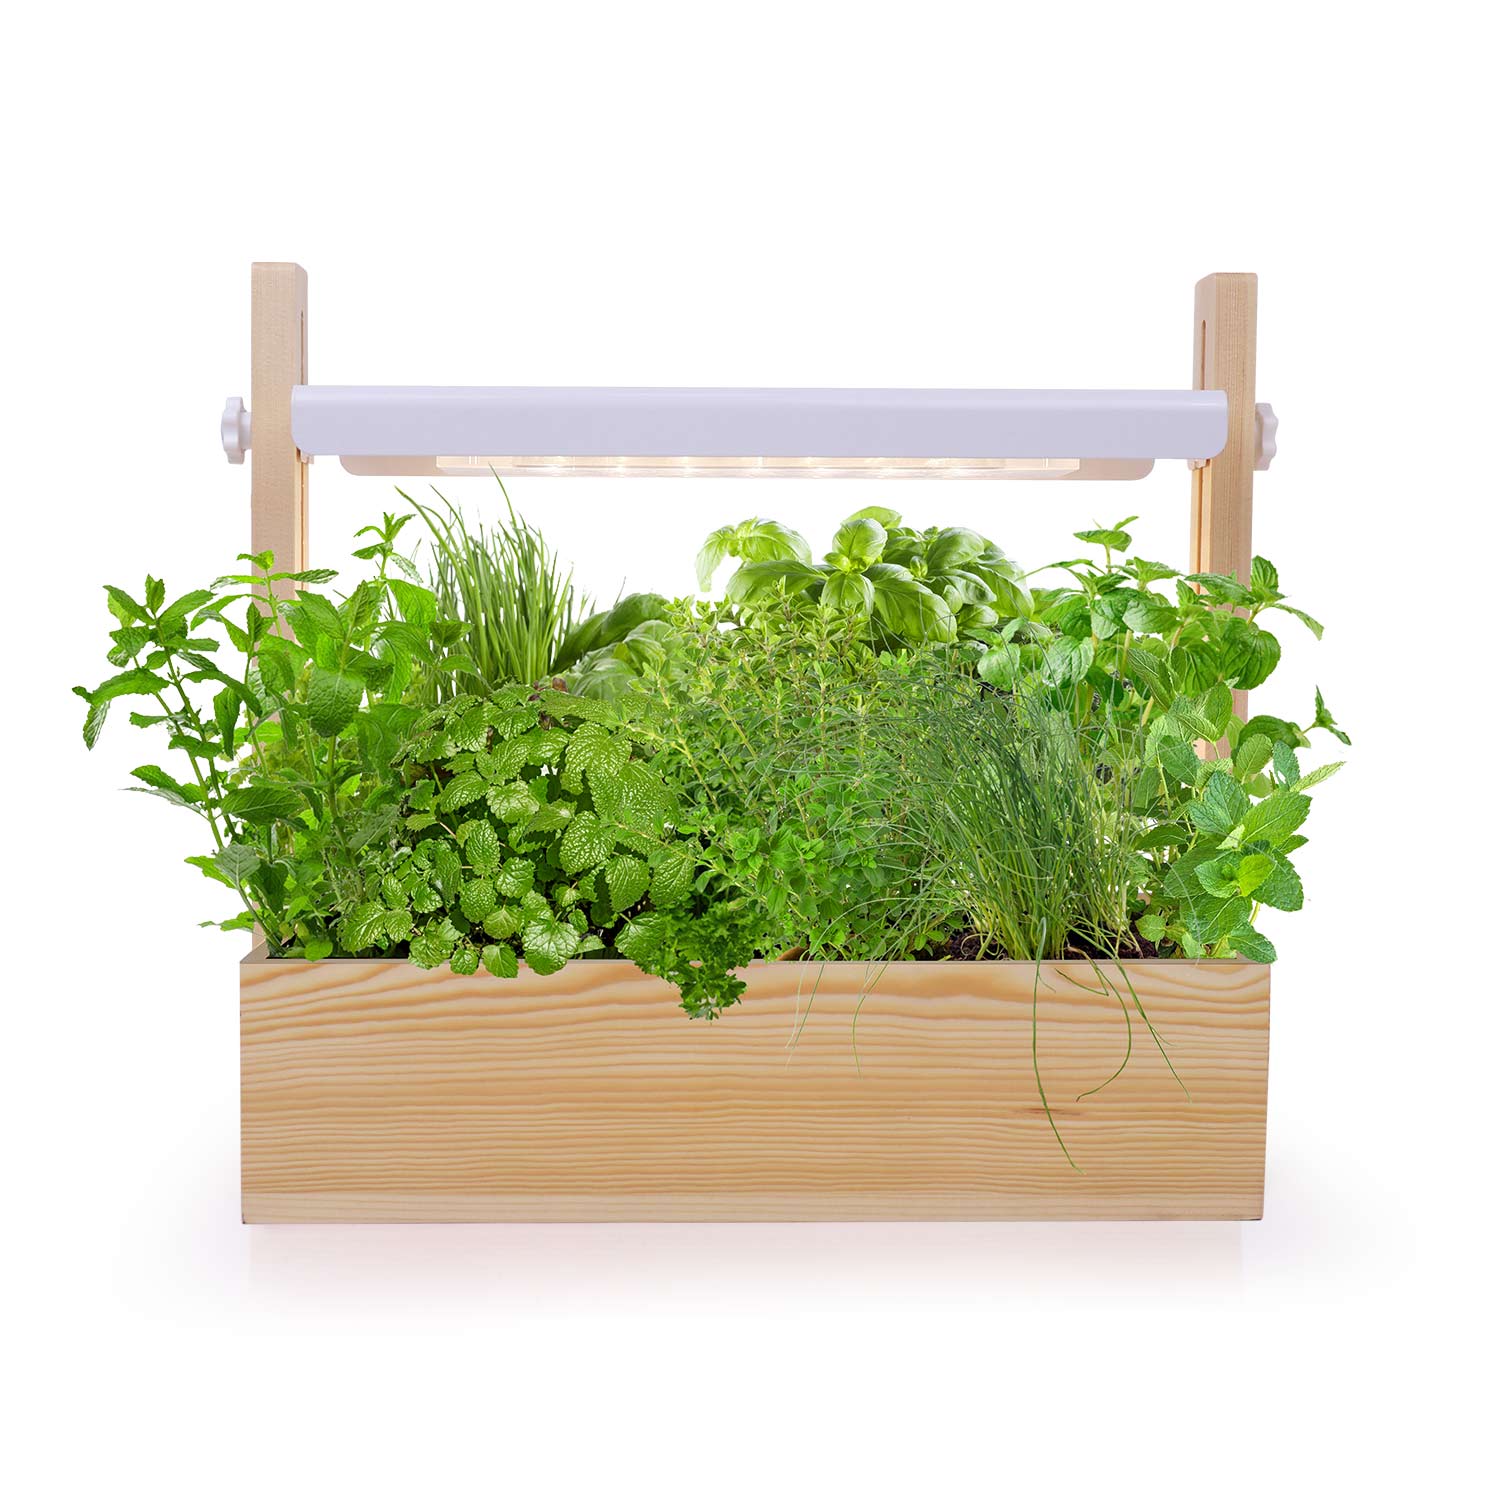 MG412 indoor herb mini garden hydroponic plants full spectrum led grow lights